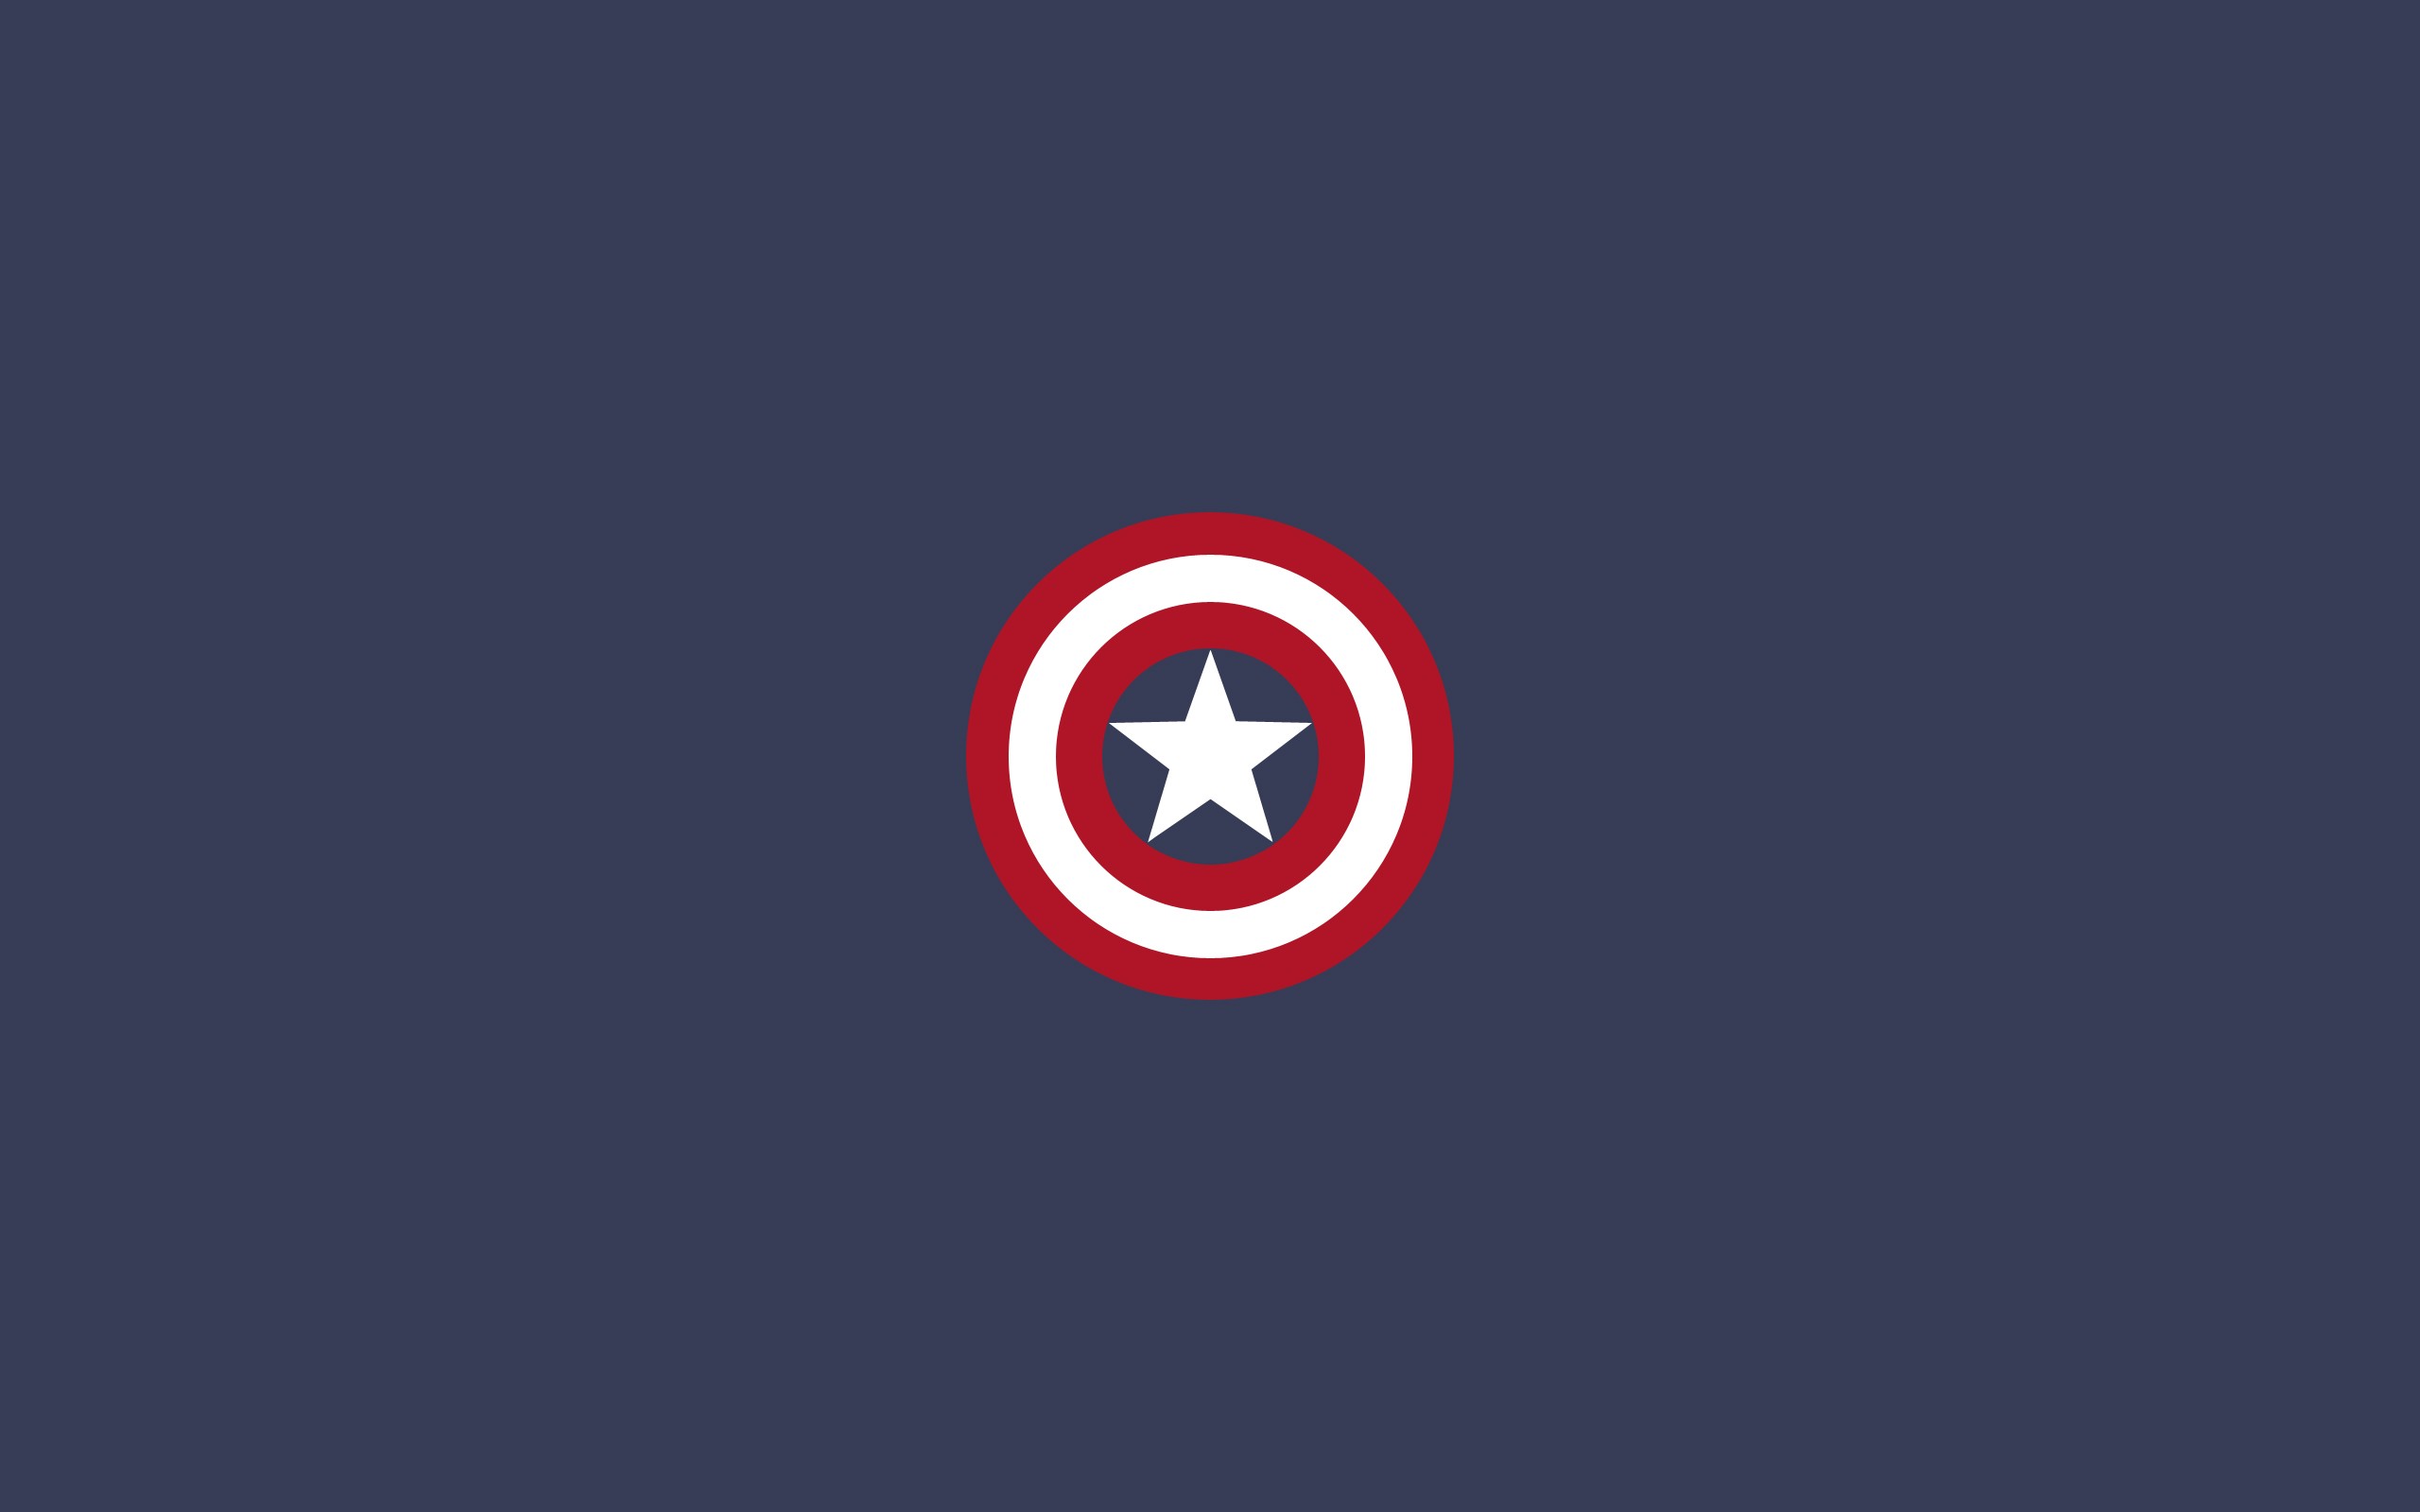 General 2560x1600 minimalism Captain America logo blue background superhero Marvel Comics